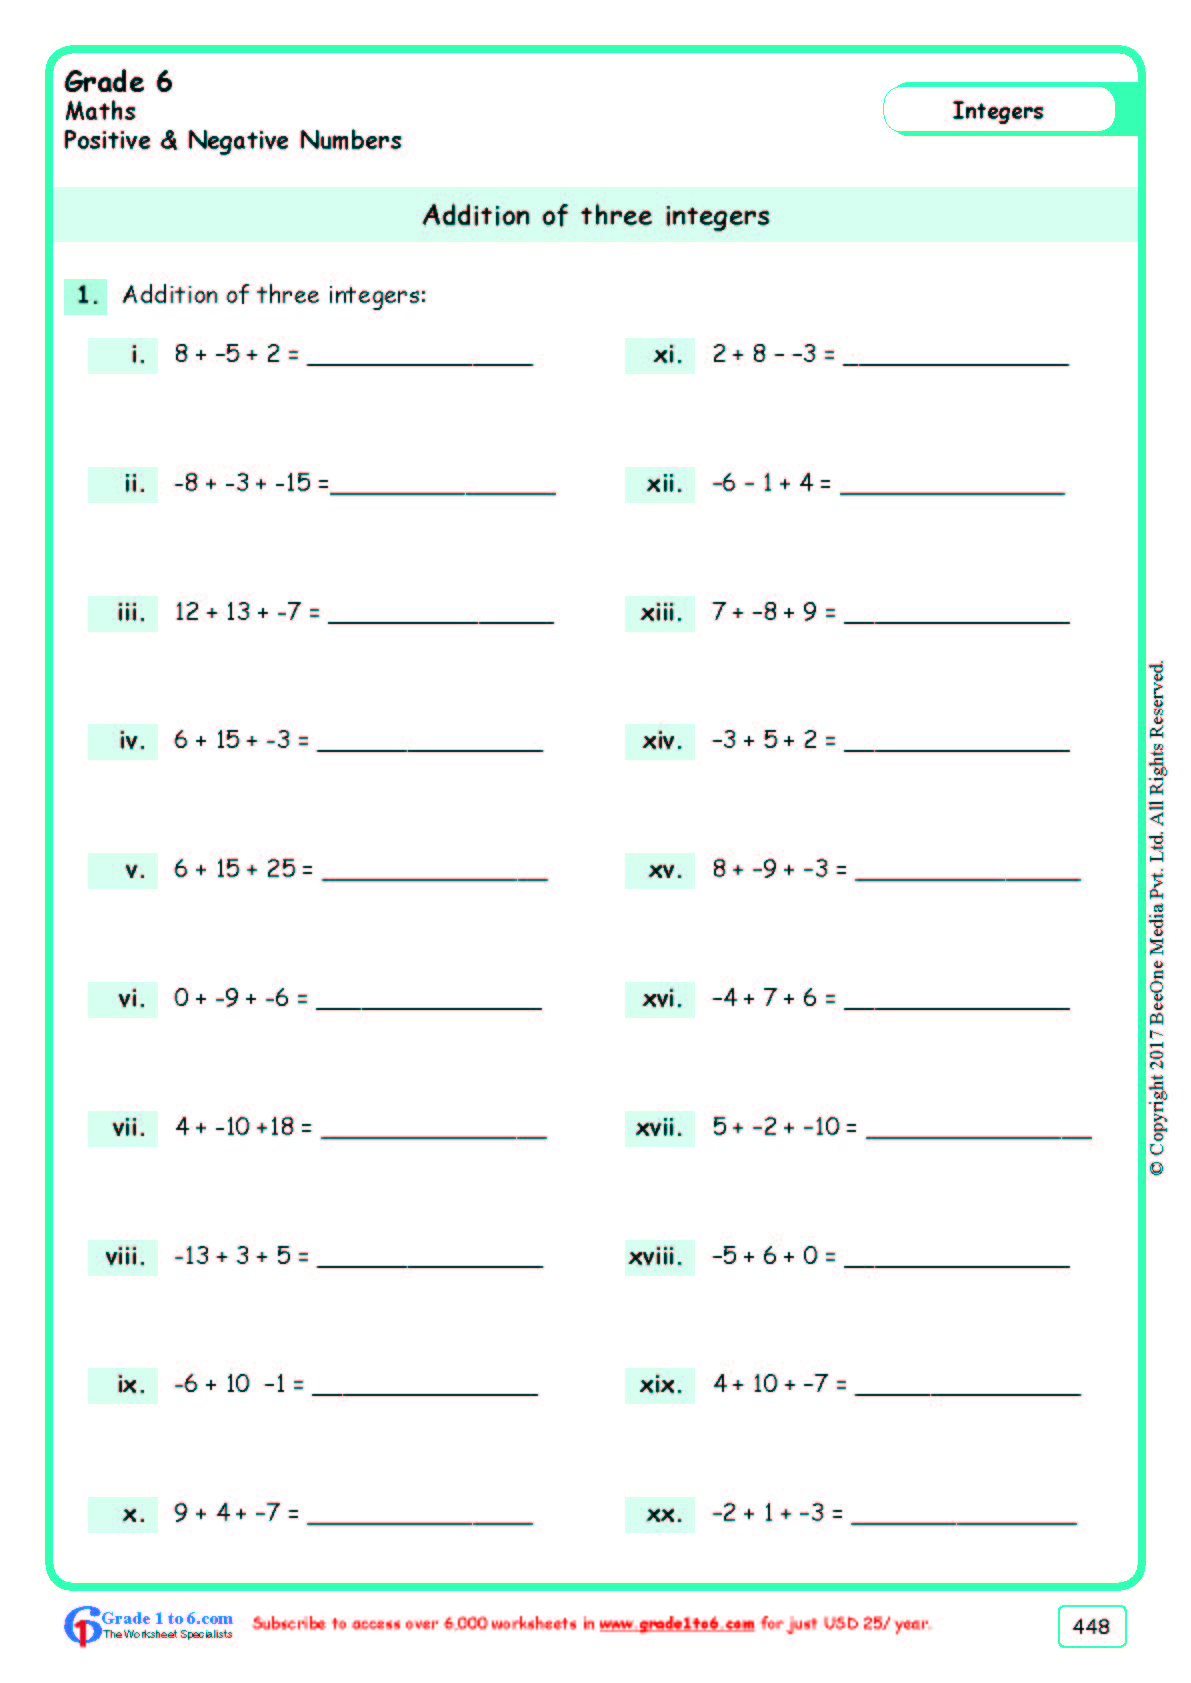 adding-positive-negative-integers-worksheets-www-grade1to6